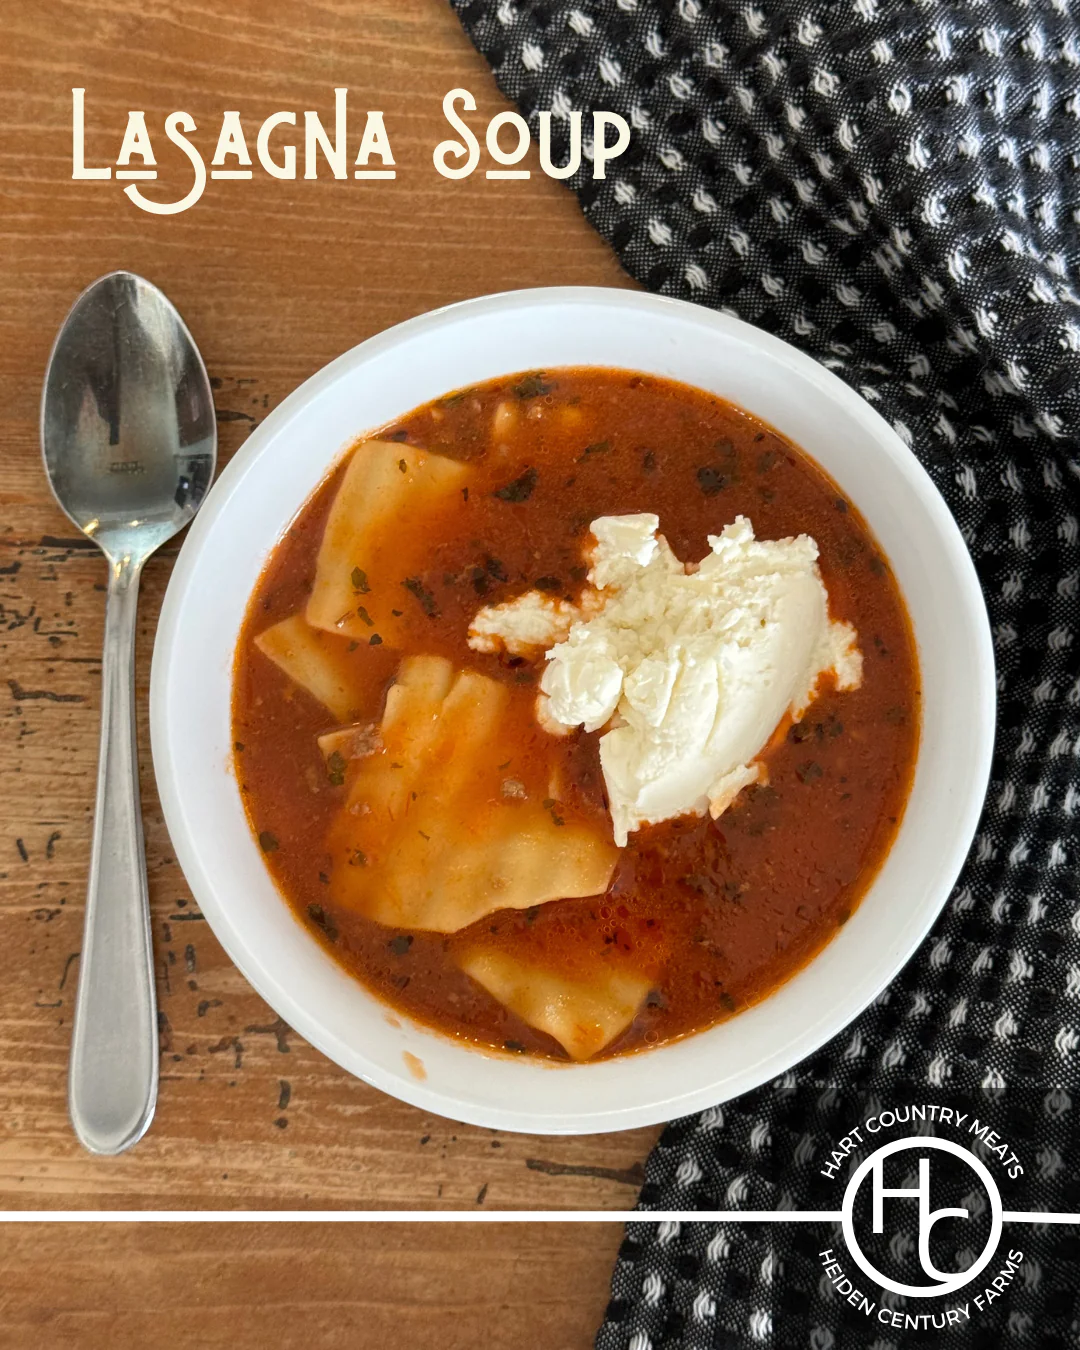 Image of Lasagna Soup